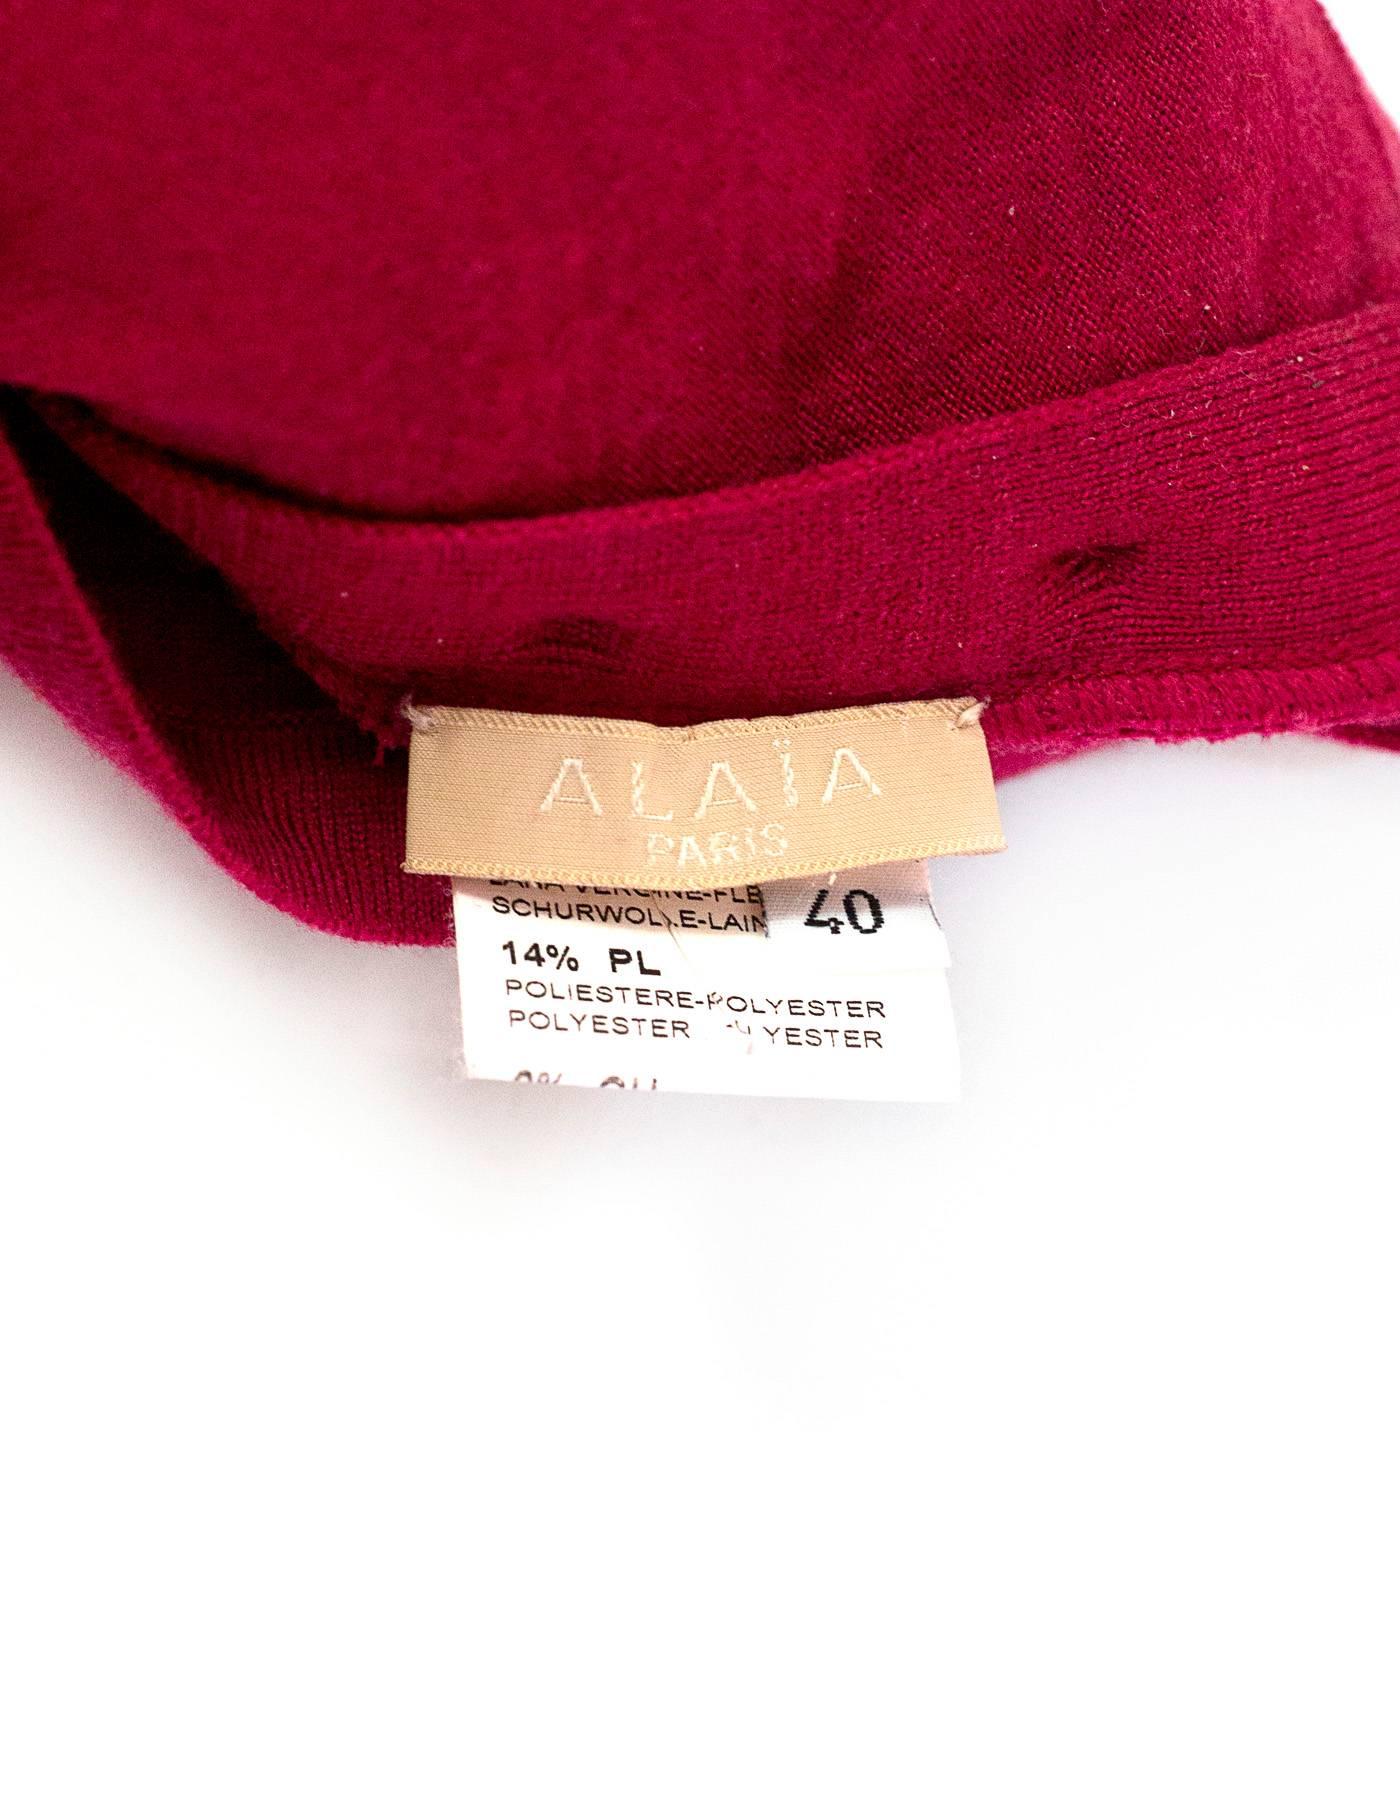 Alaia Burgundy Wool Ruched Long Sleeve Top sz FR40 1